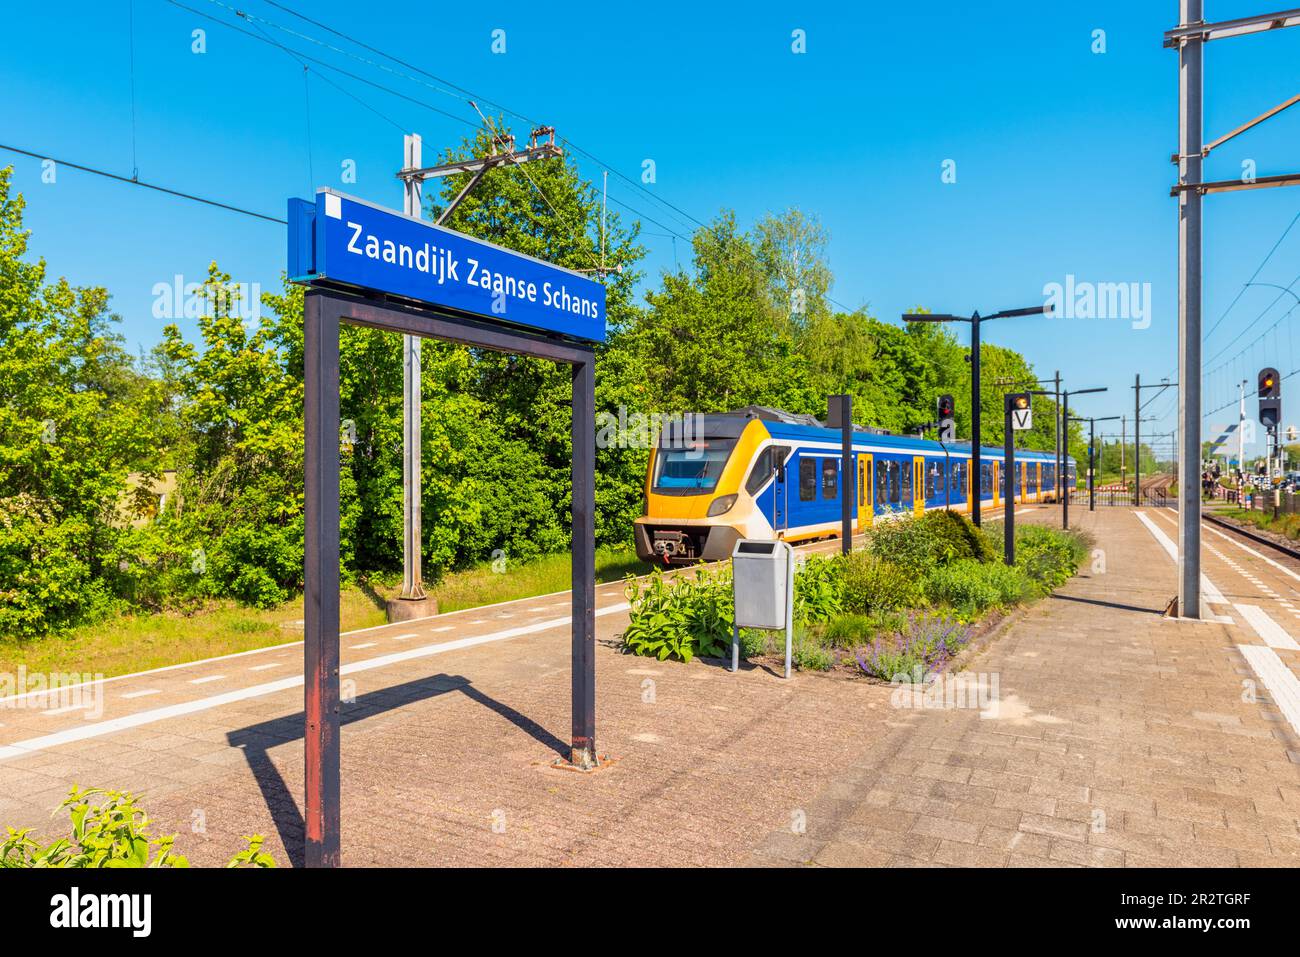 Zug nähert sich Zaandijk Zaanse Schans Bahnhof in Zaandam Niederlande Stockfoto